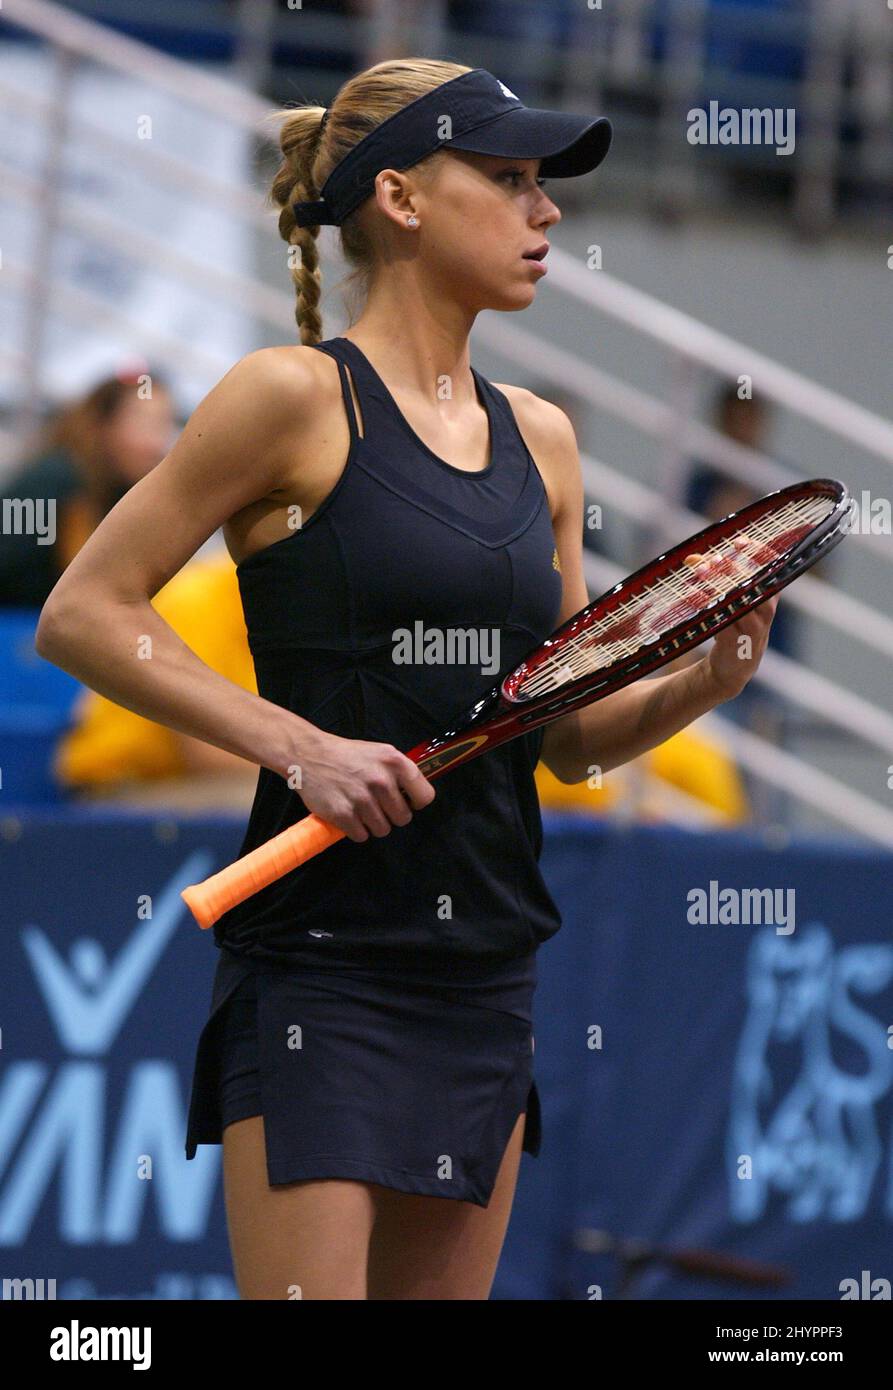 Anna kournikova tennis hi-res stock photography and images - Alamy